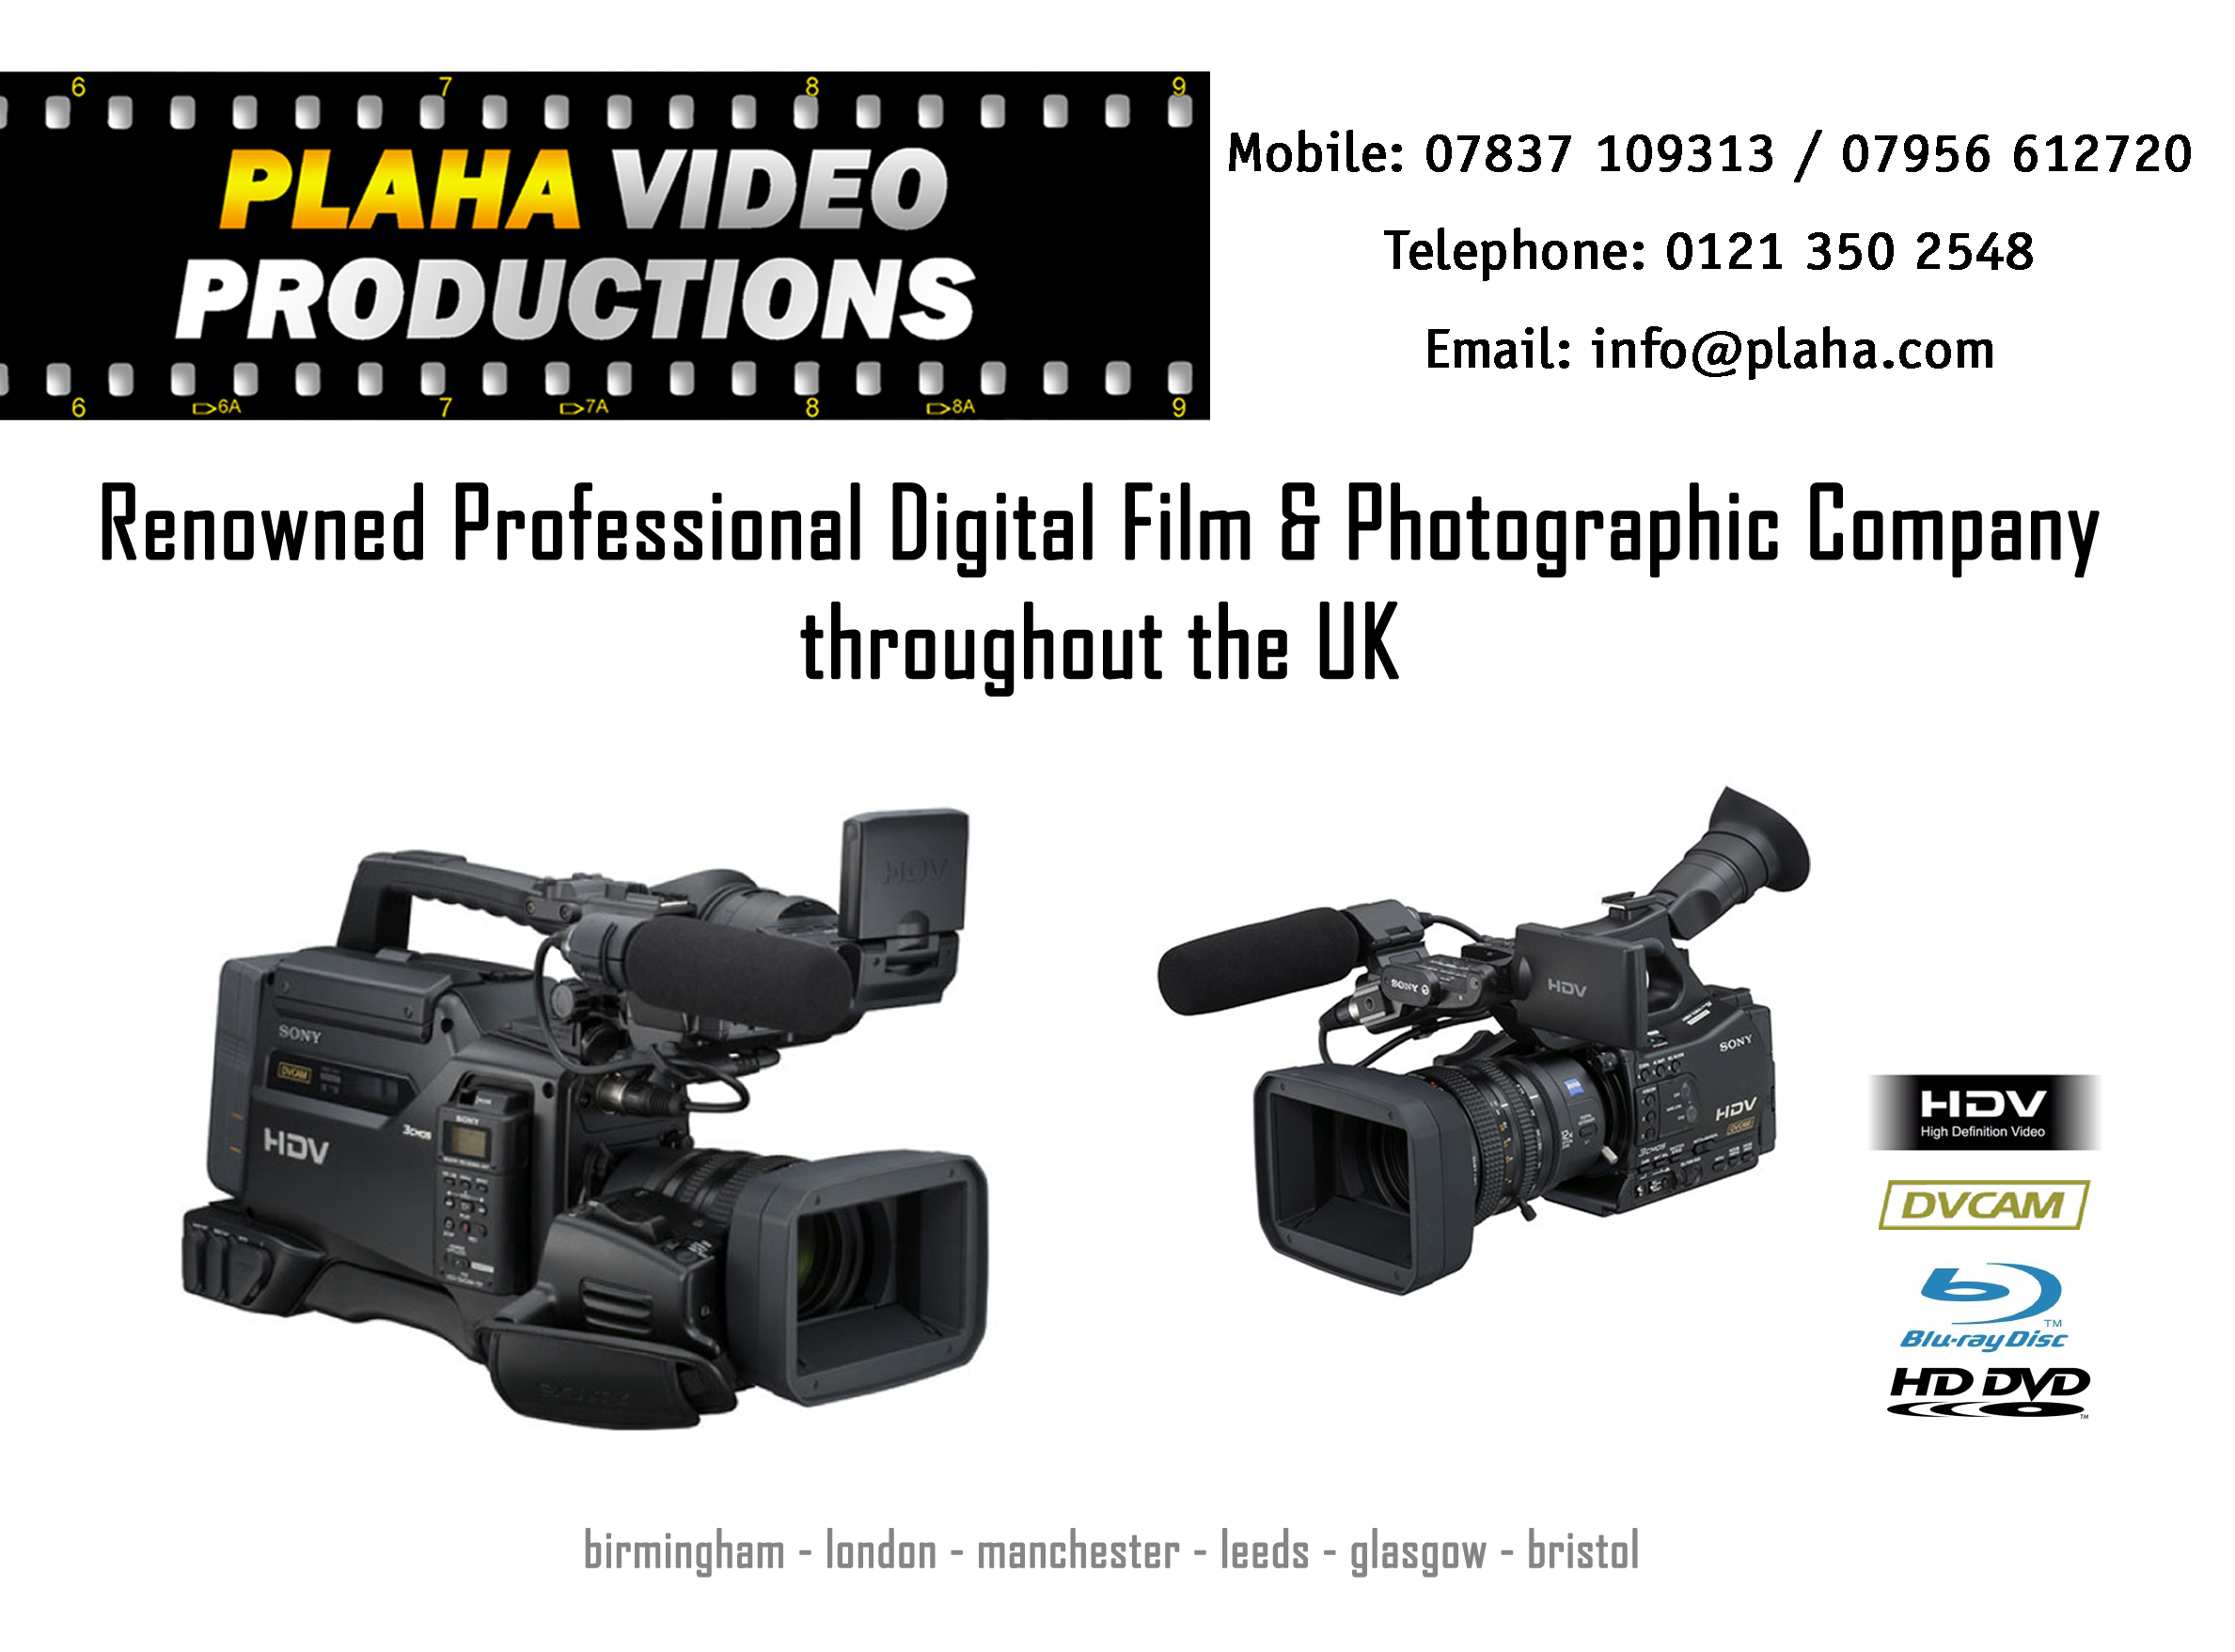 Plaha Video Productions